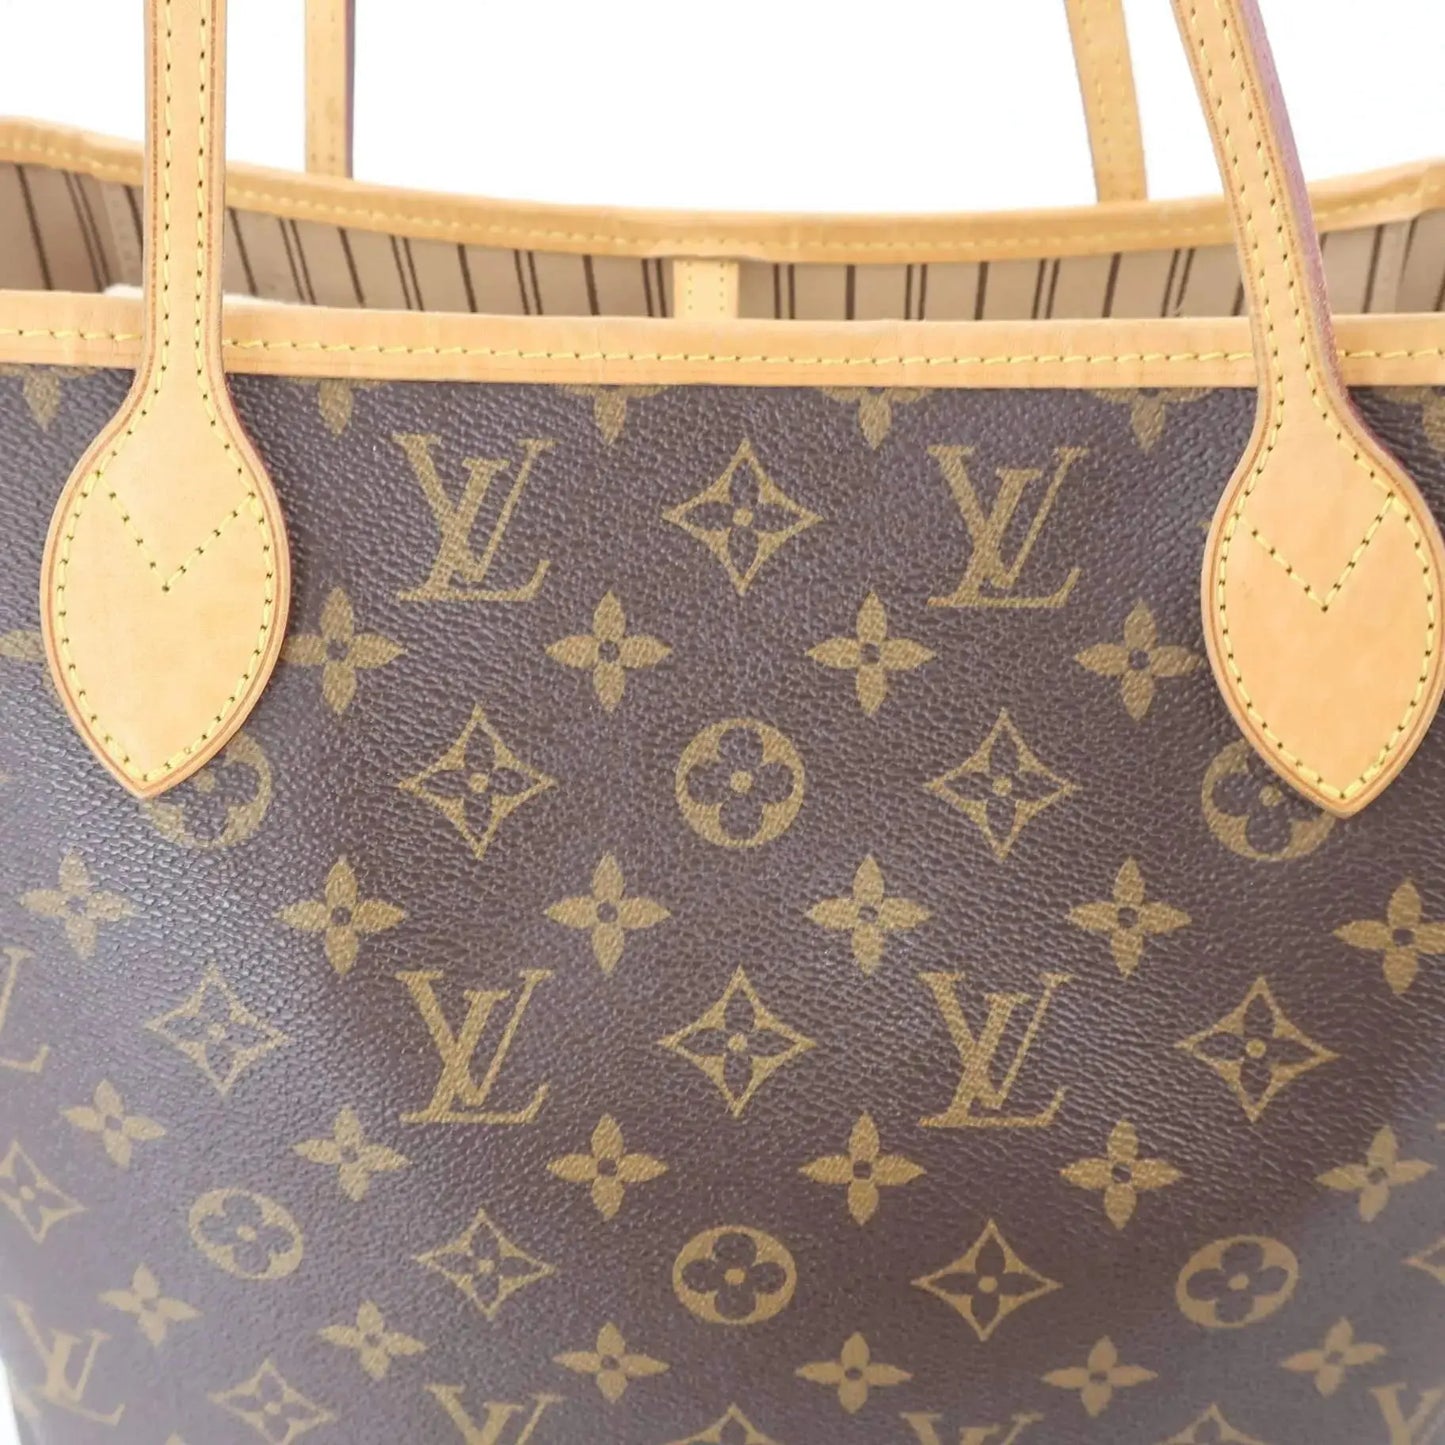 Louis Vuitton Louis Vuitton Neverfull MM Monogram Bag LVBagaholic